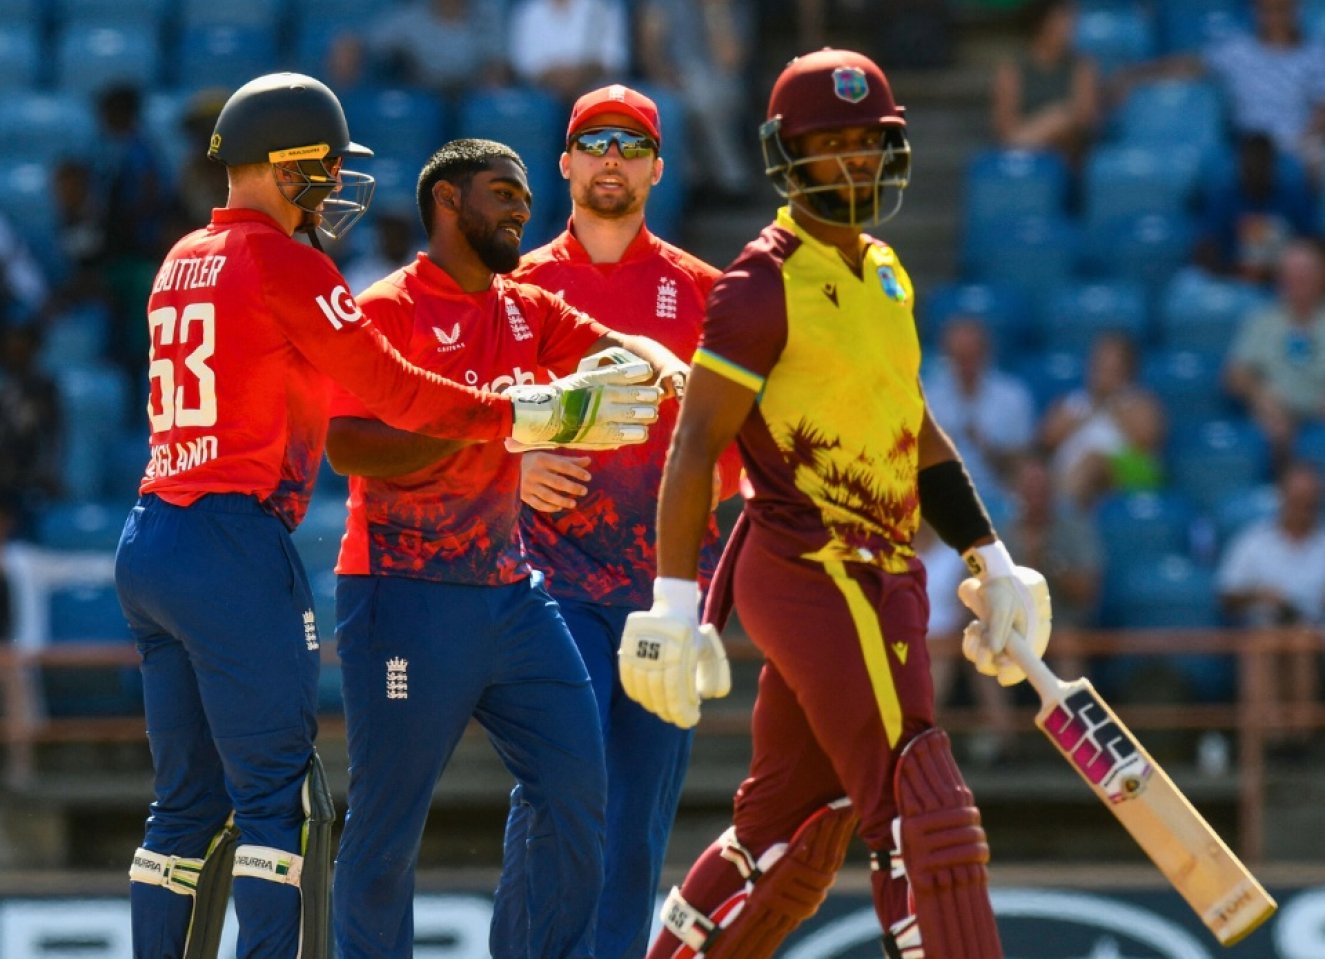 West Indies v England ODI & T20 Series 2024 ticket package to watch England v West Indies cricket in the Caribbean image